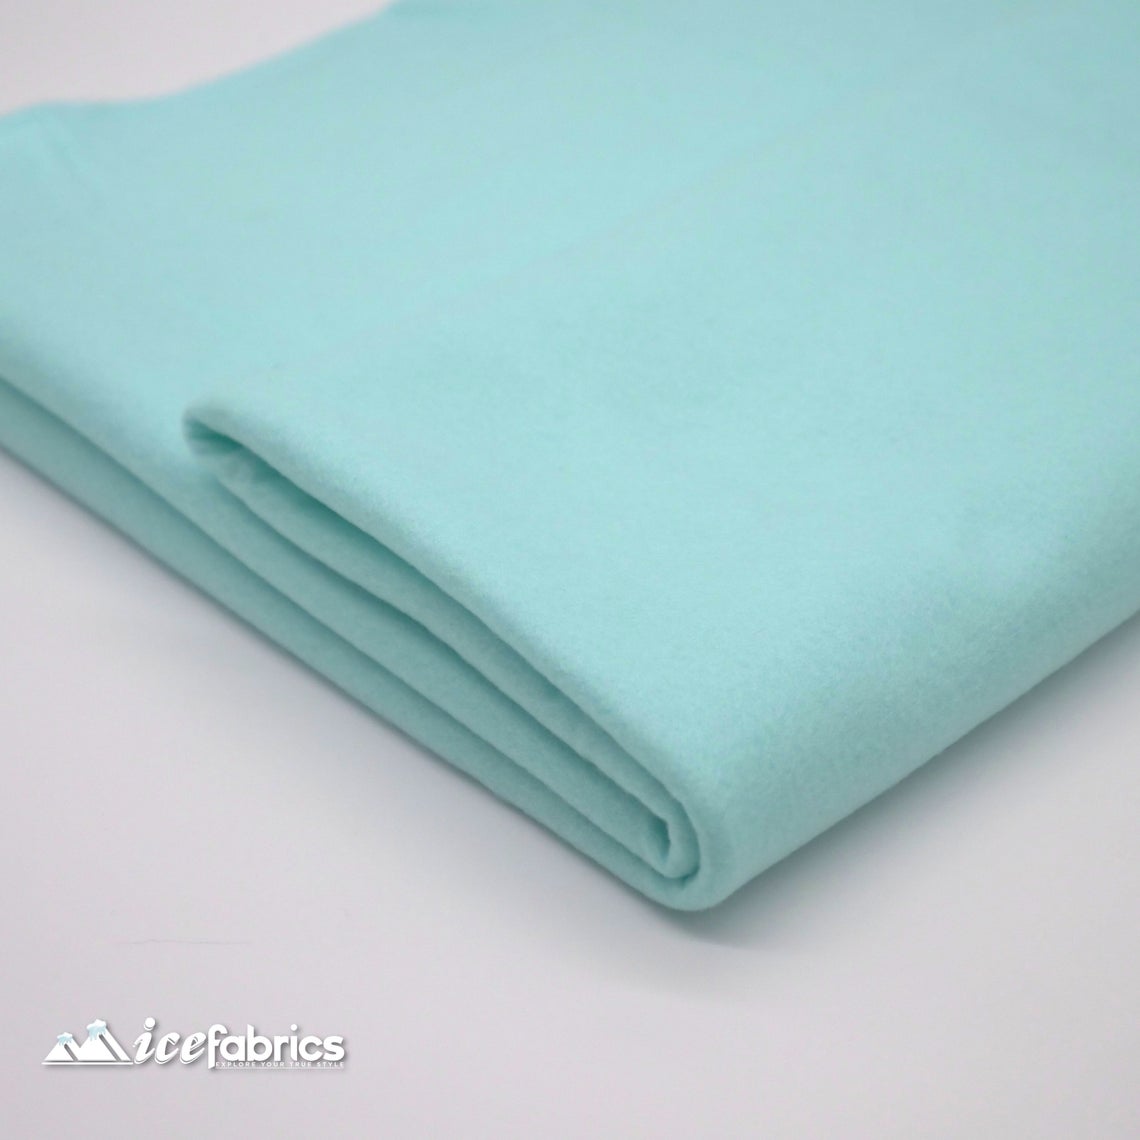 Acrylic Felt Fabric By The Roll | 20 yards | Wholesale Fabric ICE FABRICS Aqua